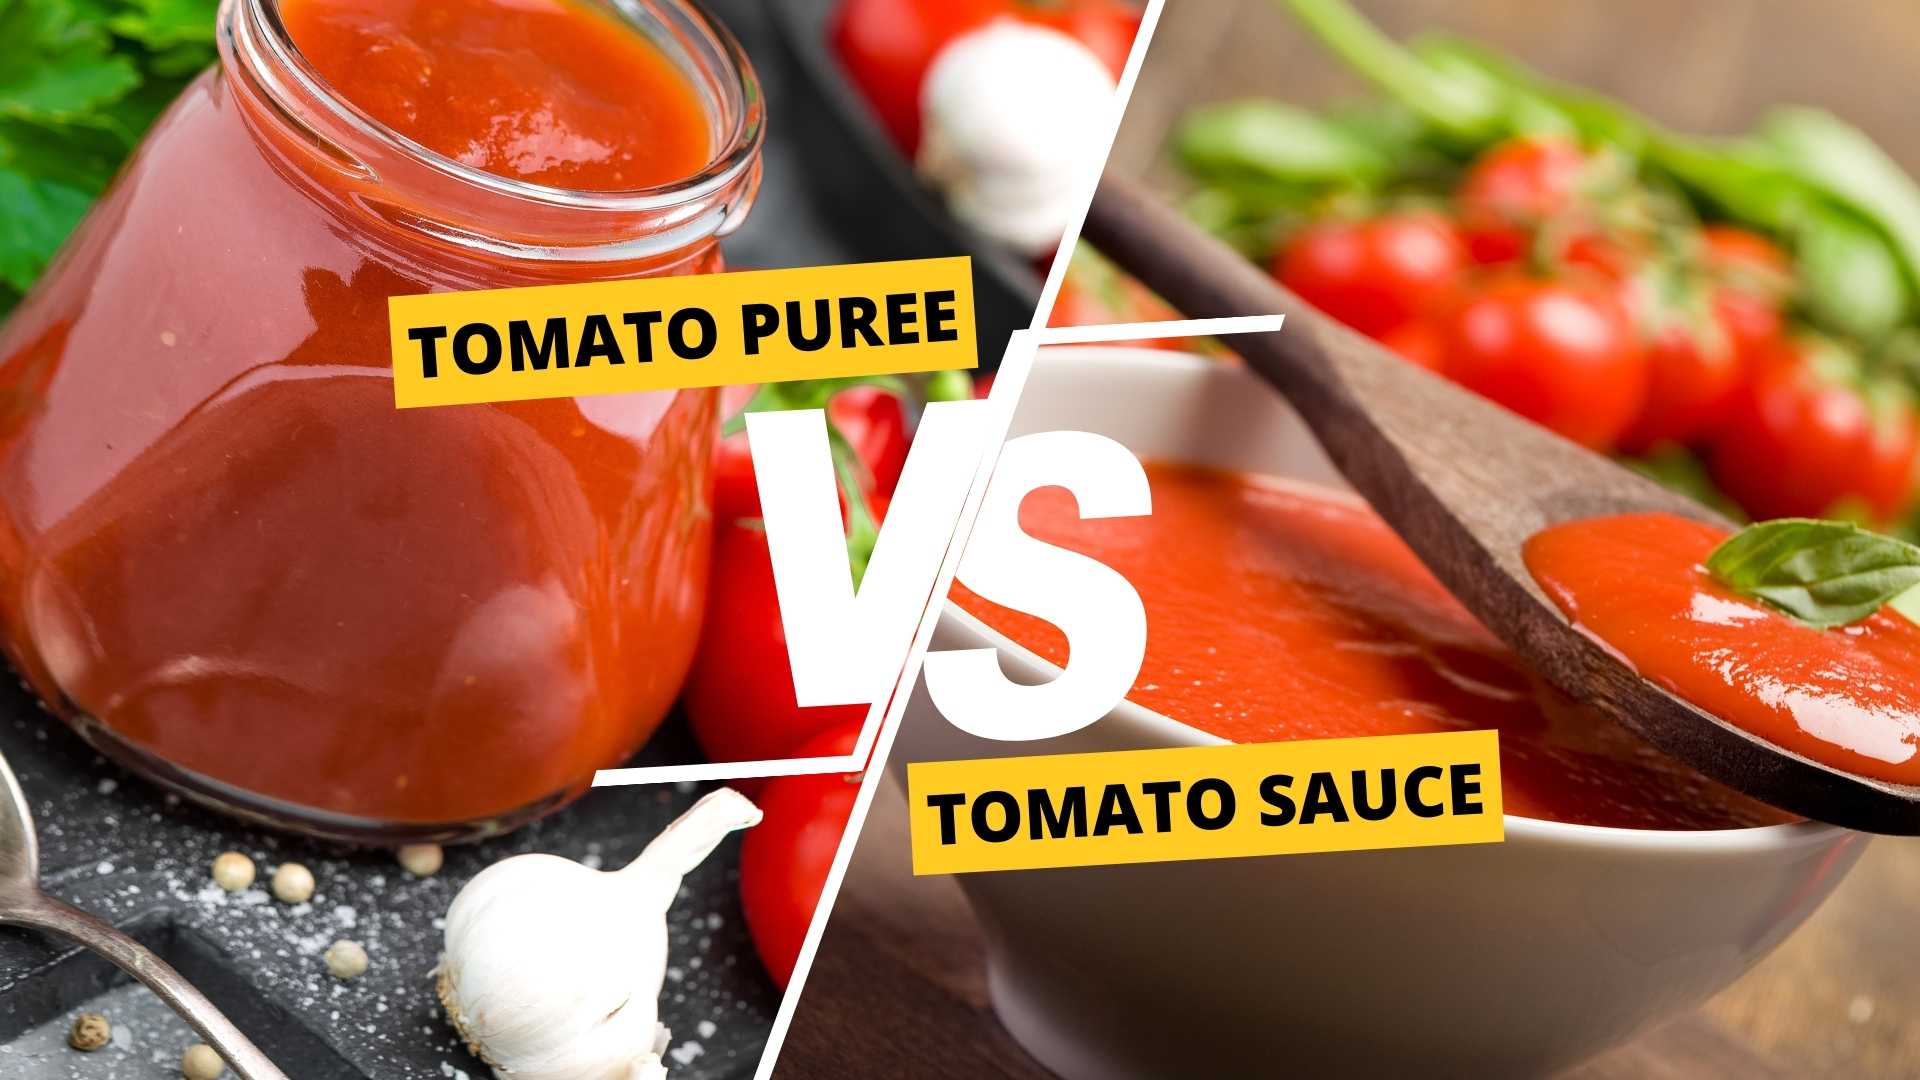 Tomato Puree vs Sauce